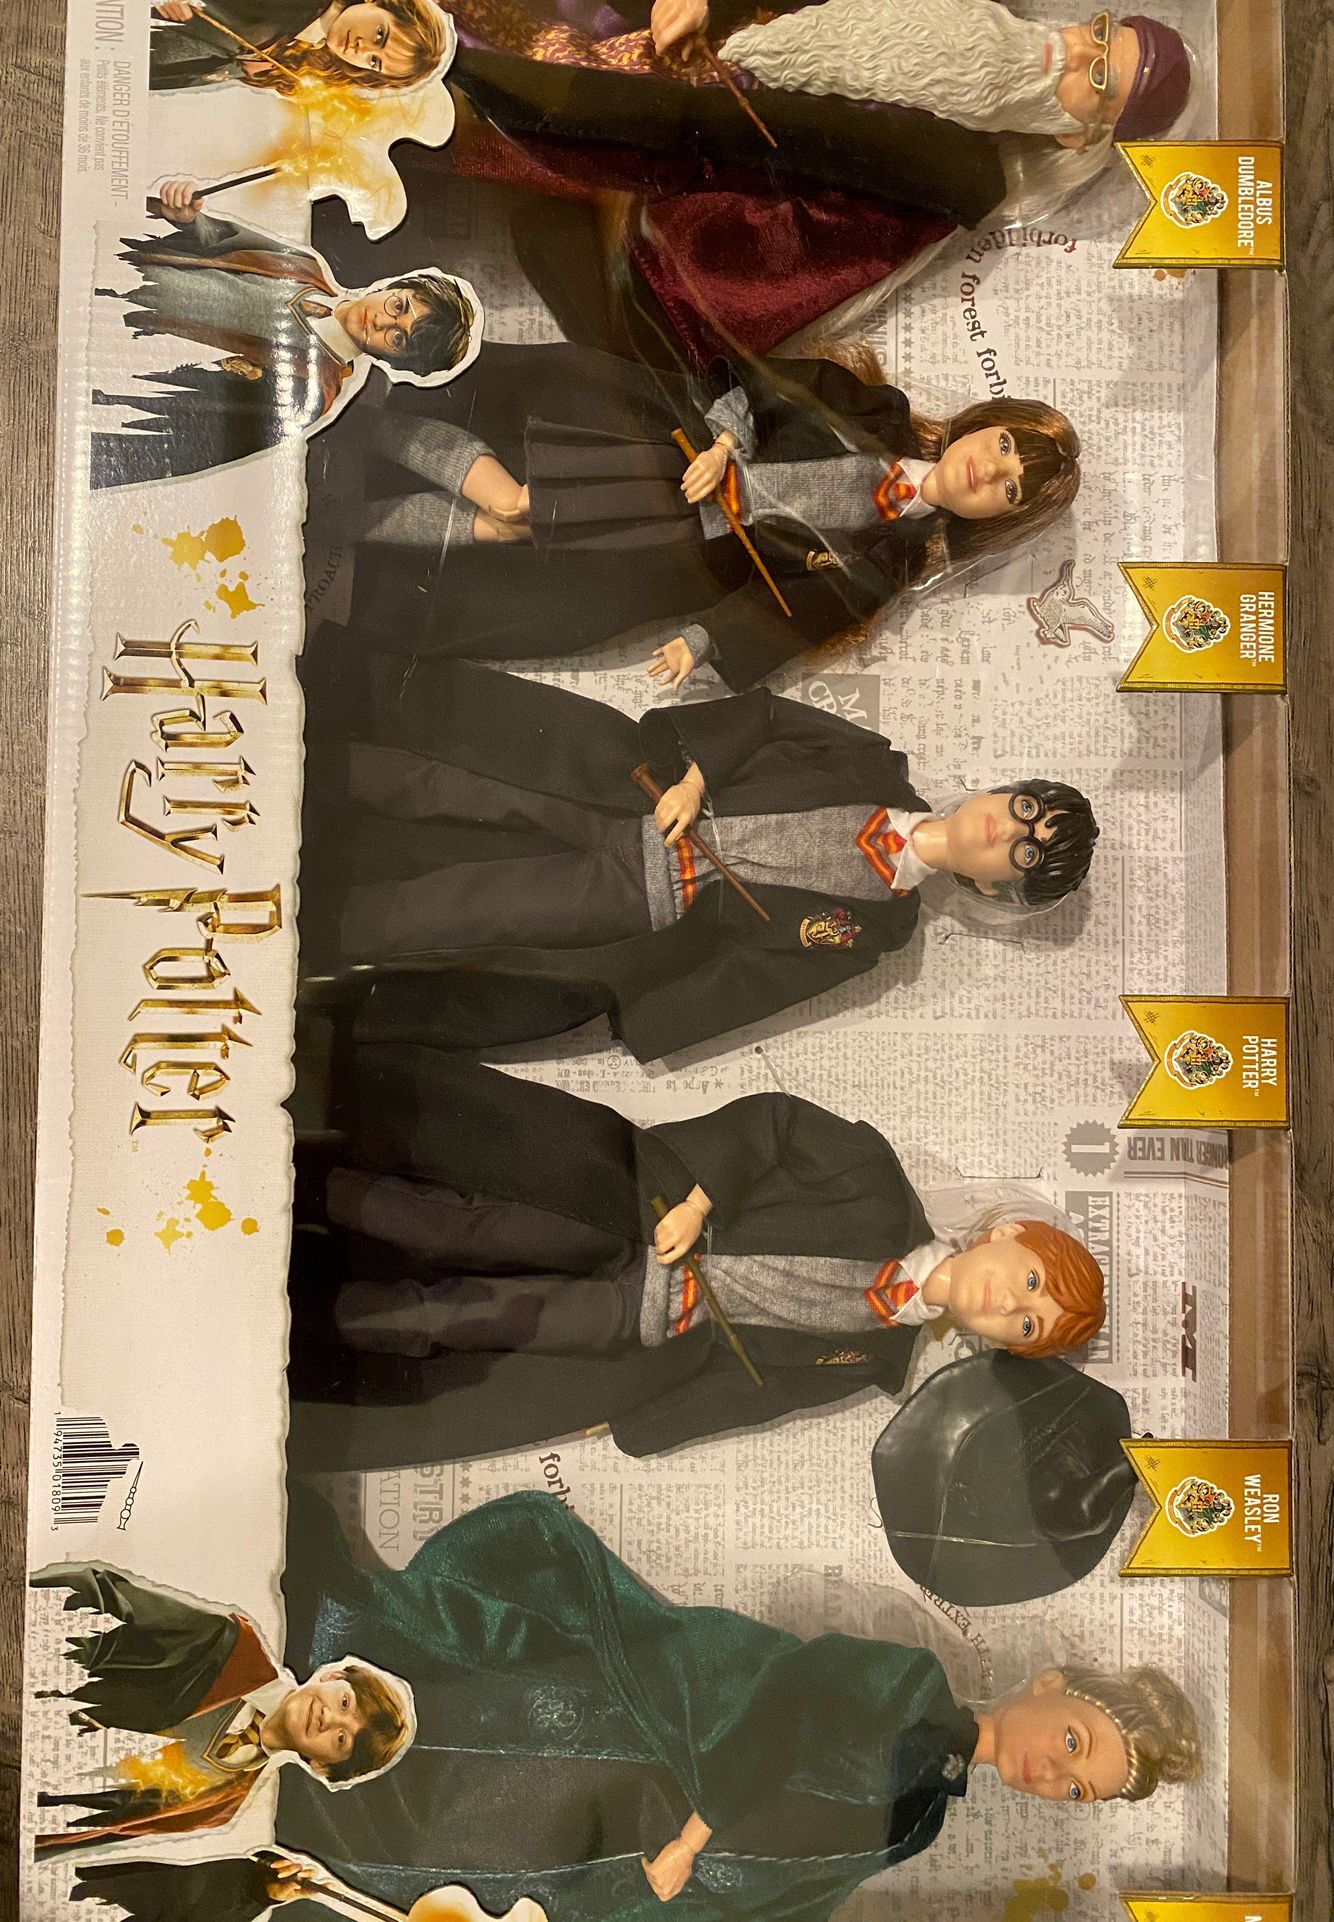 Harry potter brand  new Wizarding World Harry Potter 5-Piece 10-inch Figure Set